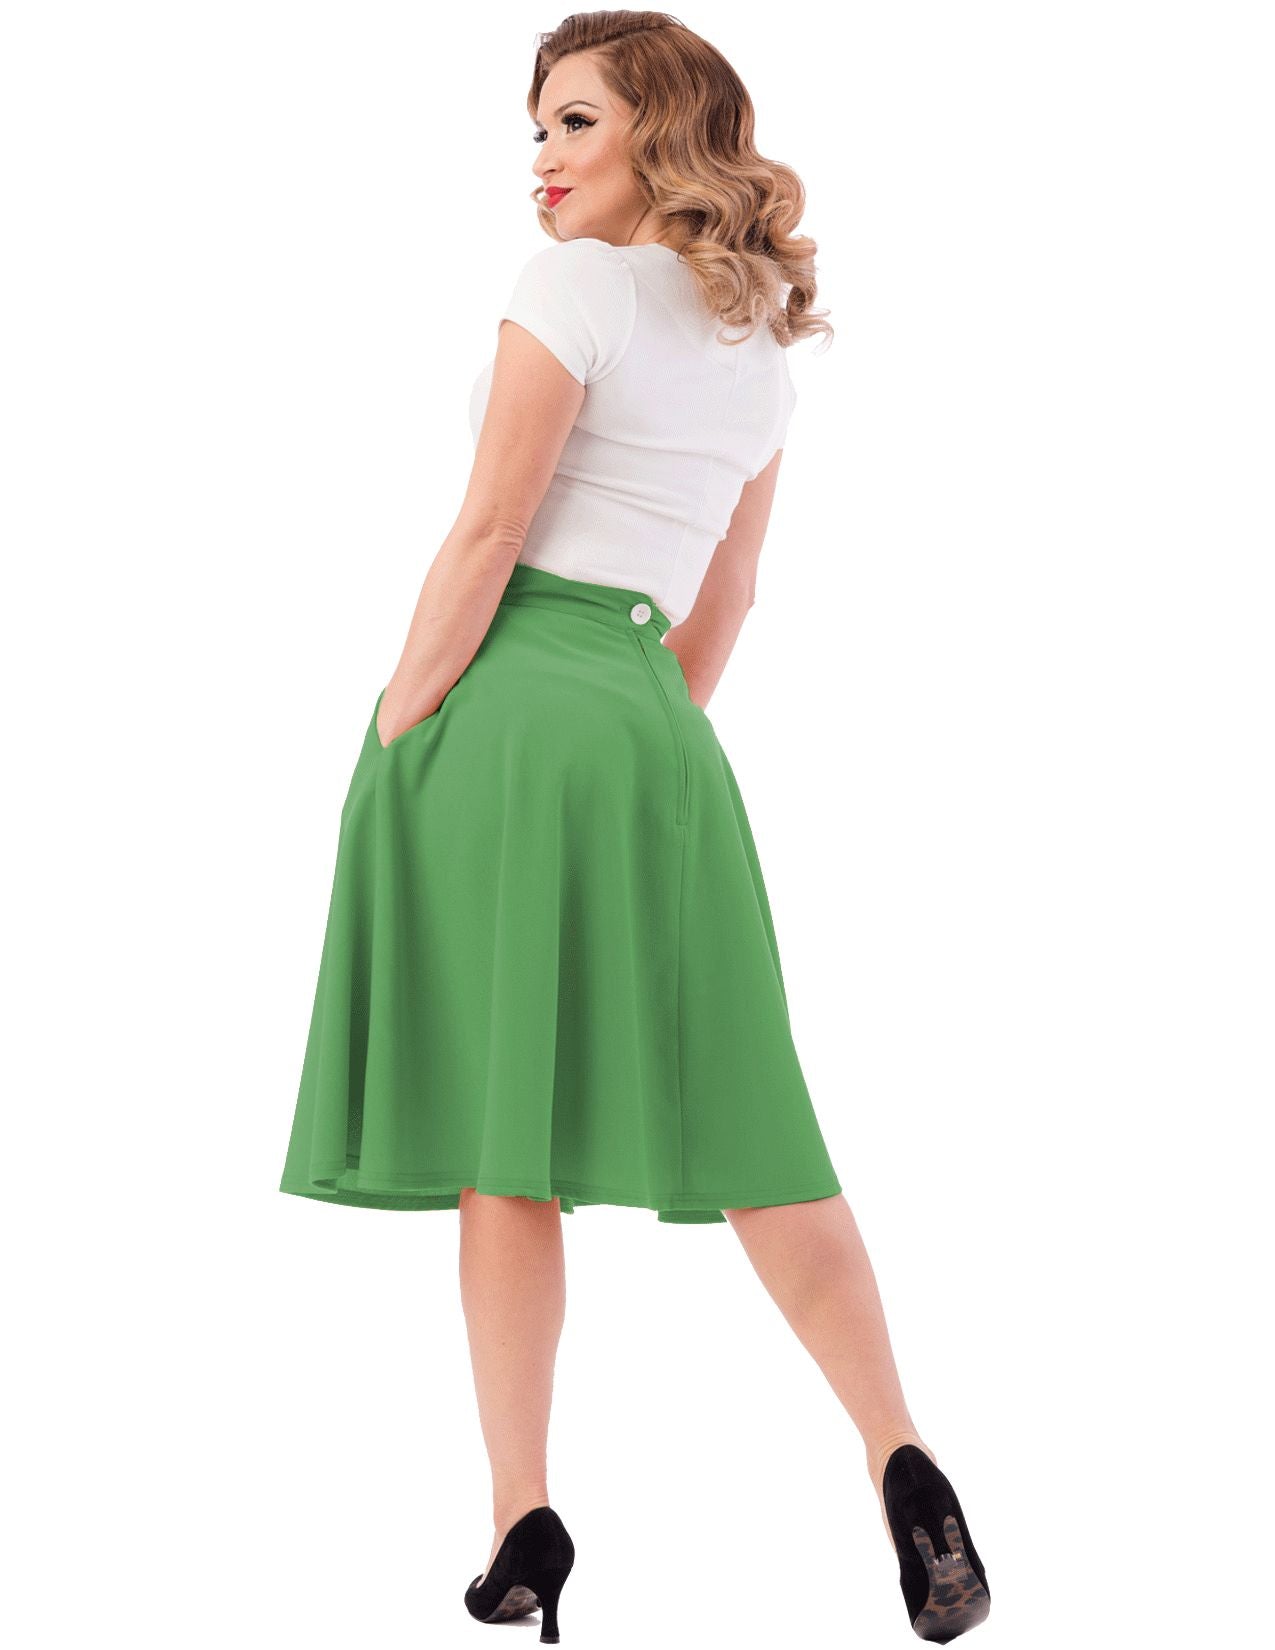 Pocket Circle Skirt in Kelly Green